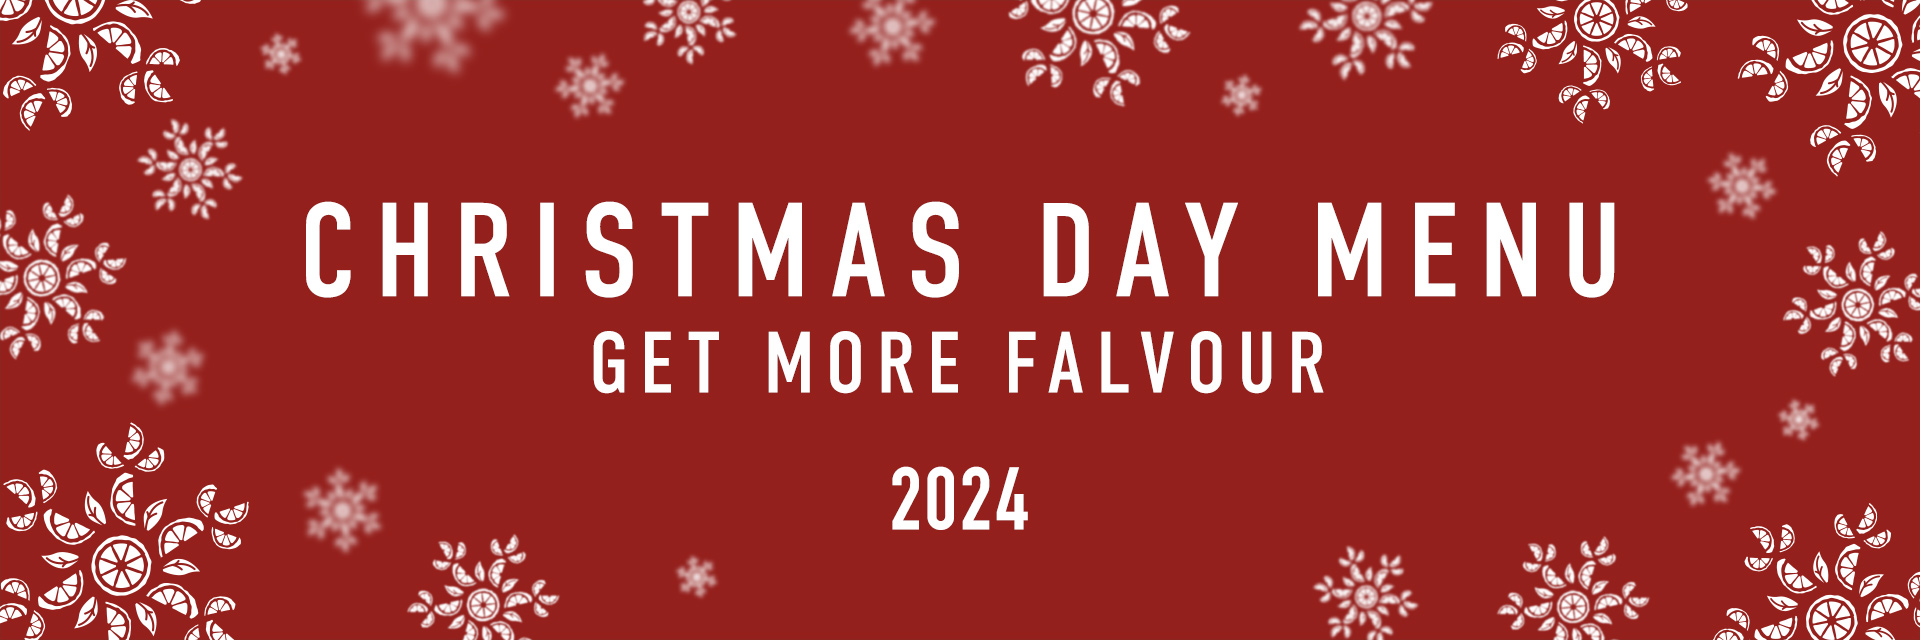 The Durley Inn Christmas Day Menu 2024  - Harvester 